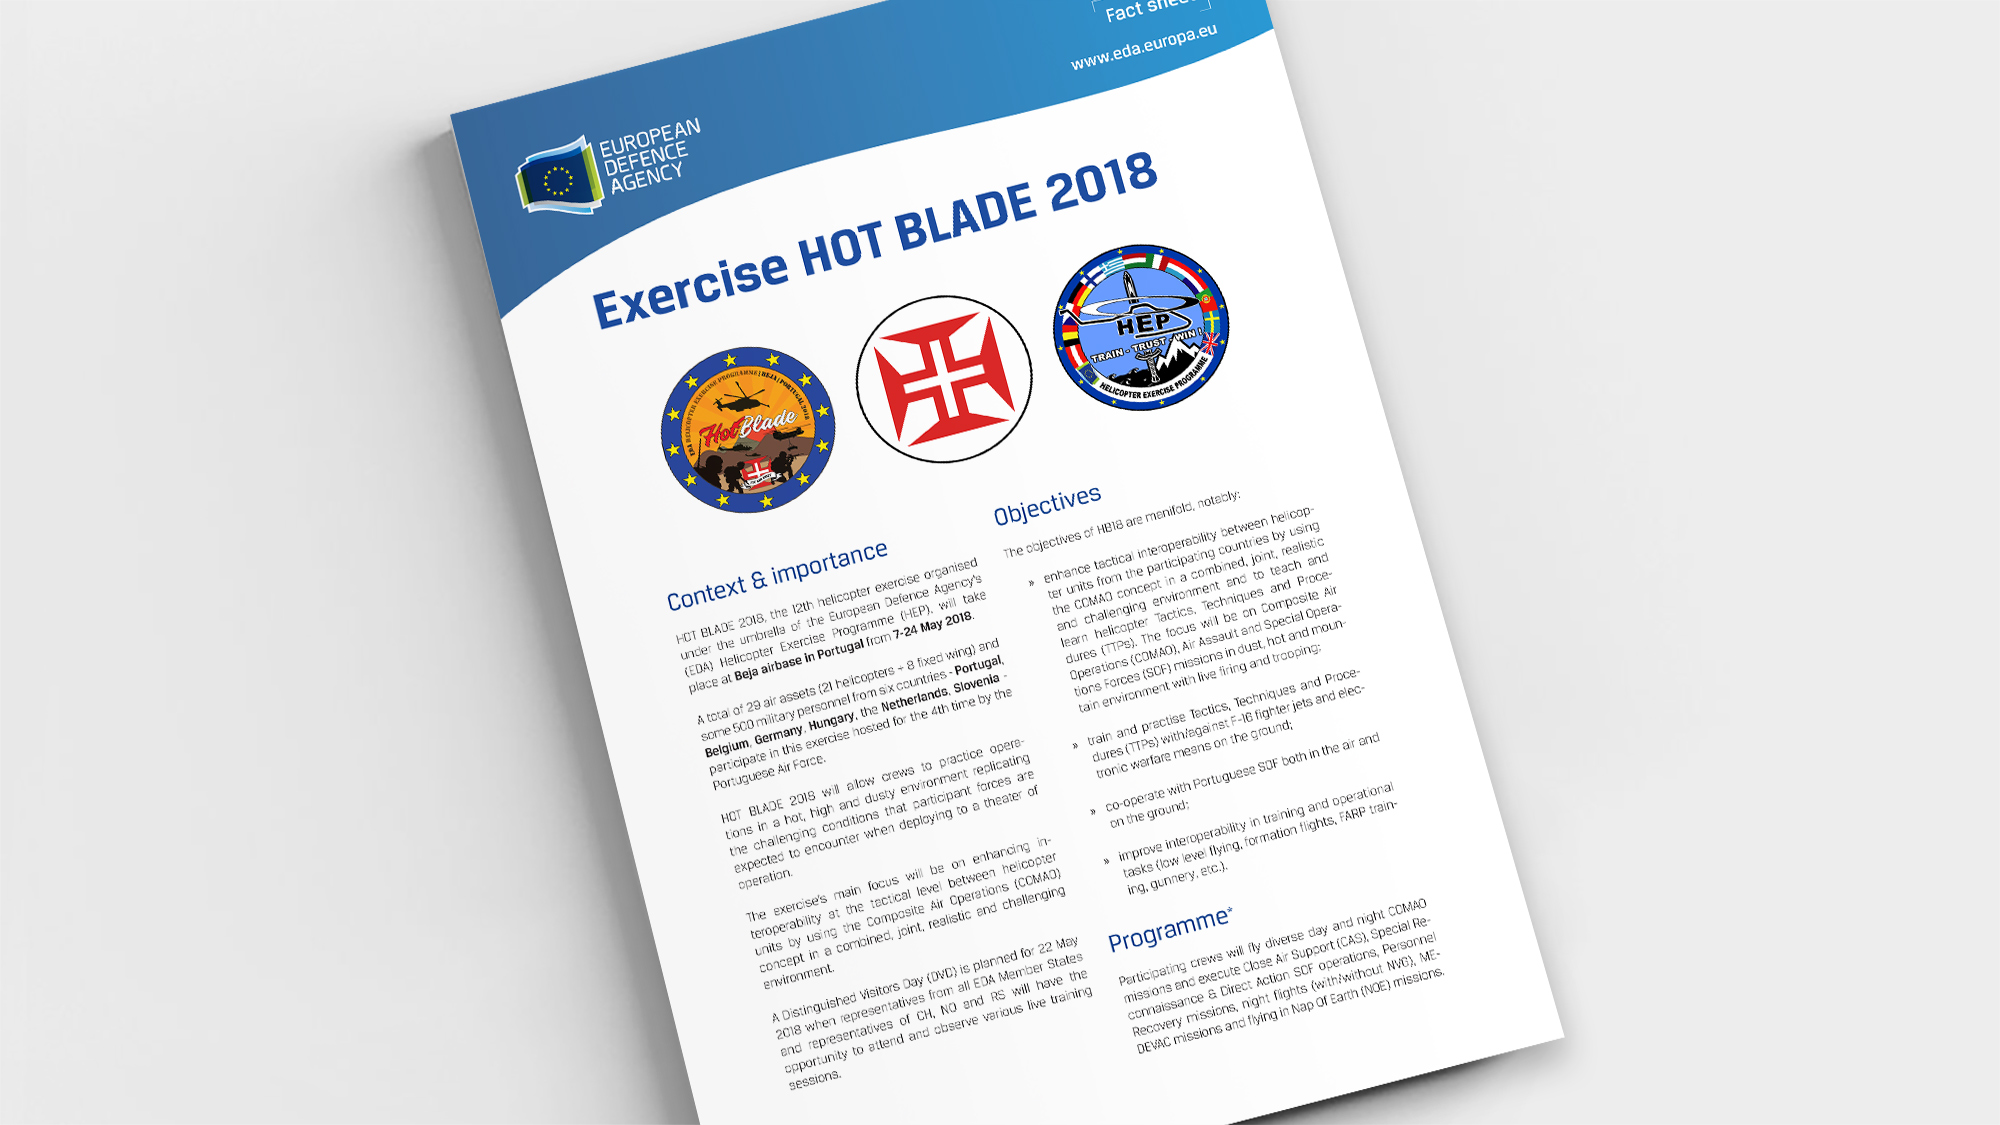 Factsheet Exercise HOT BLADE 2018